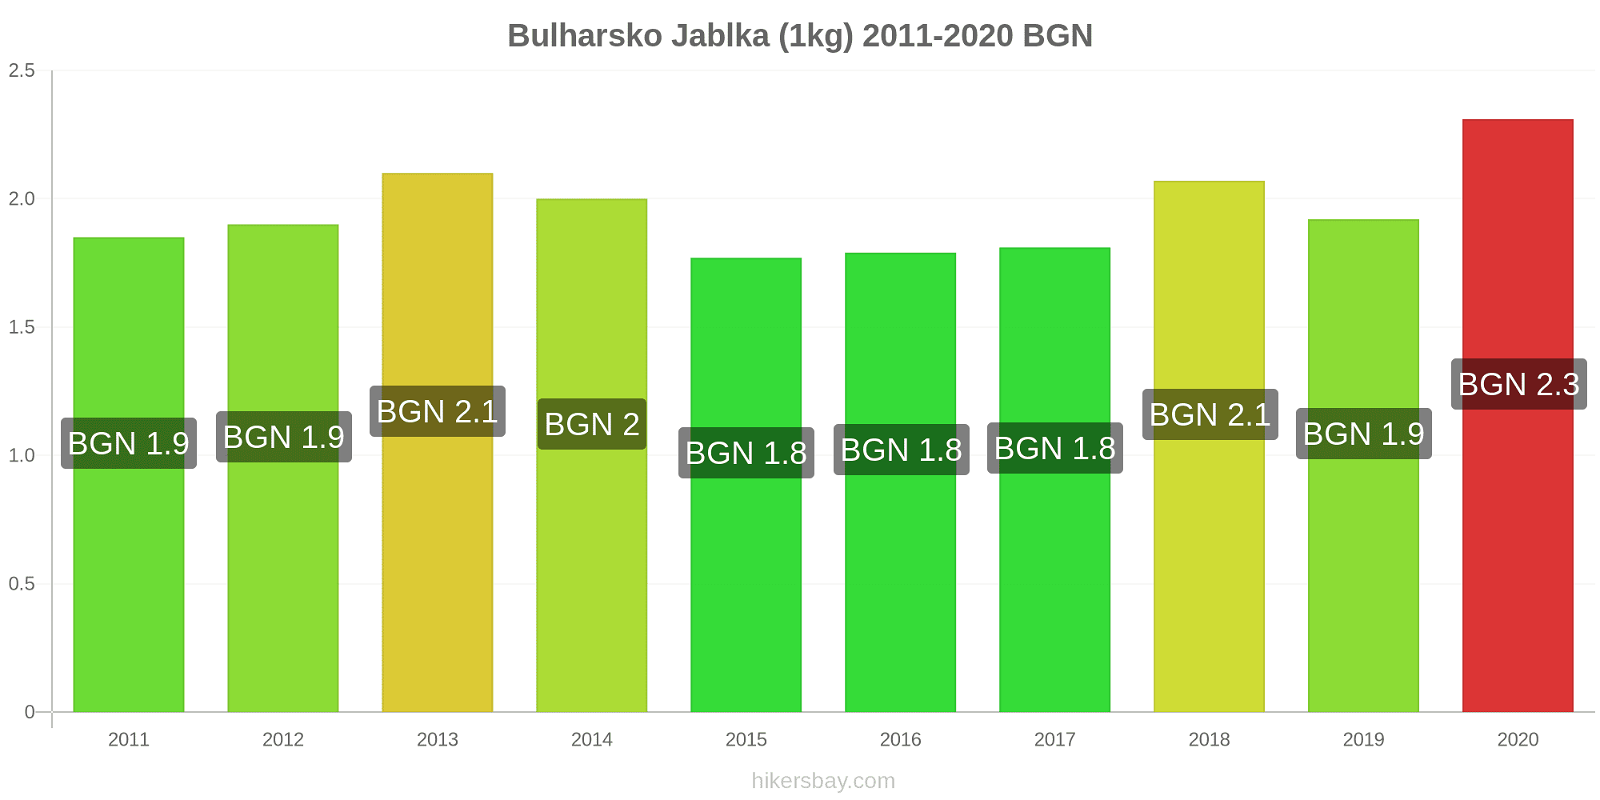 Bulharsko změny cen Jablka (1kg) hikersbay.com